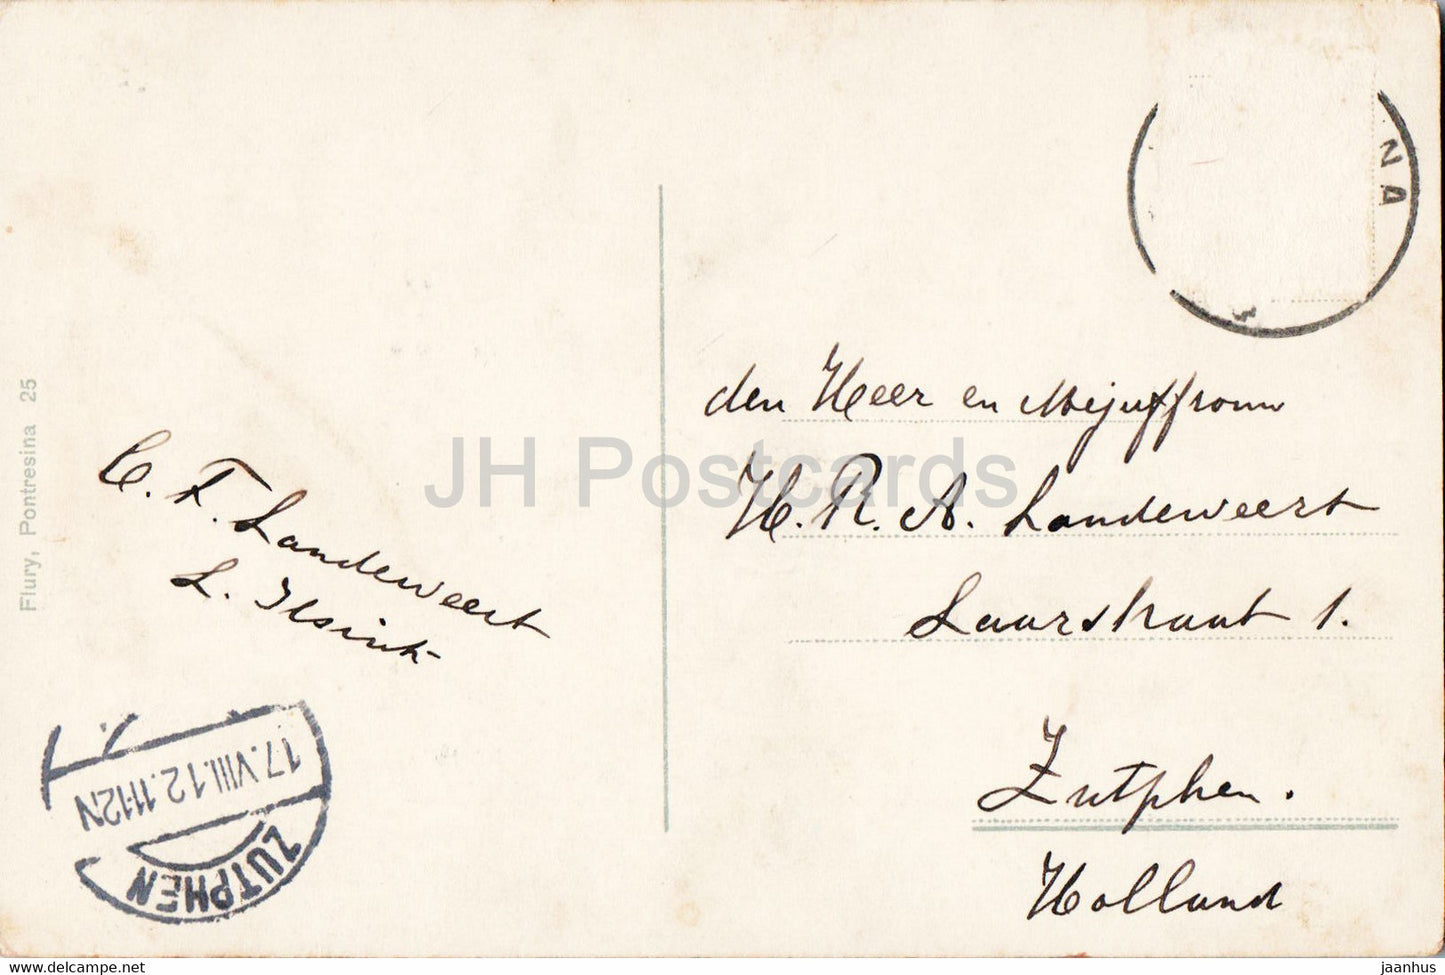 Pontresina mit Piz Palu und Roseggletscher - Roseggruppe - 25 - old postcard - 1912 - Switzerland - used